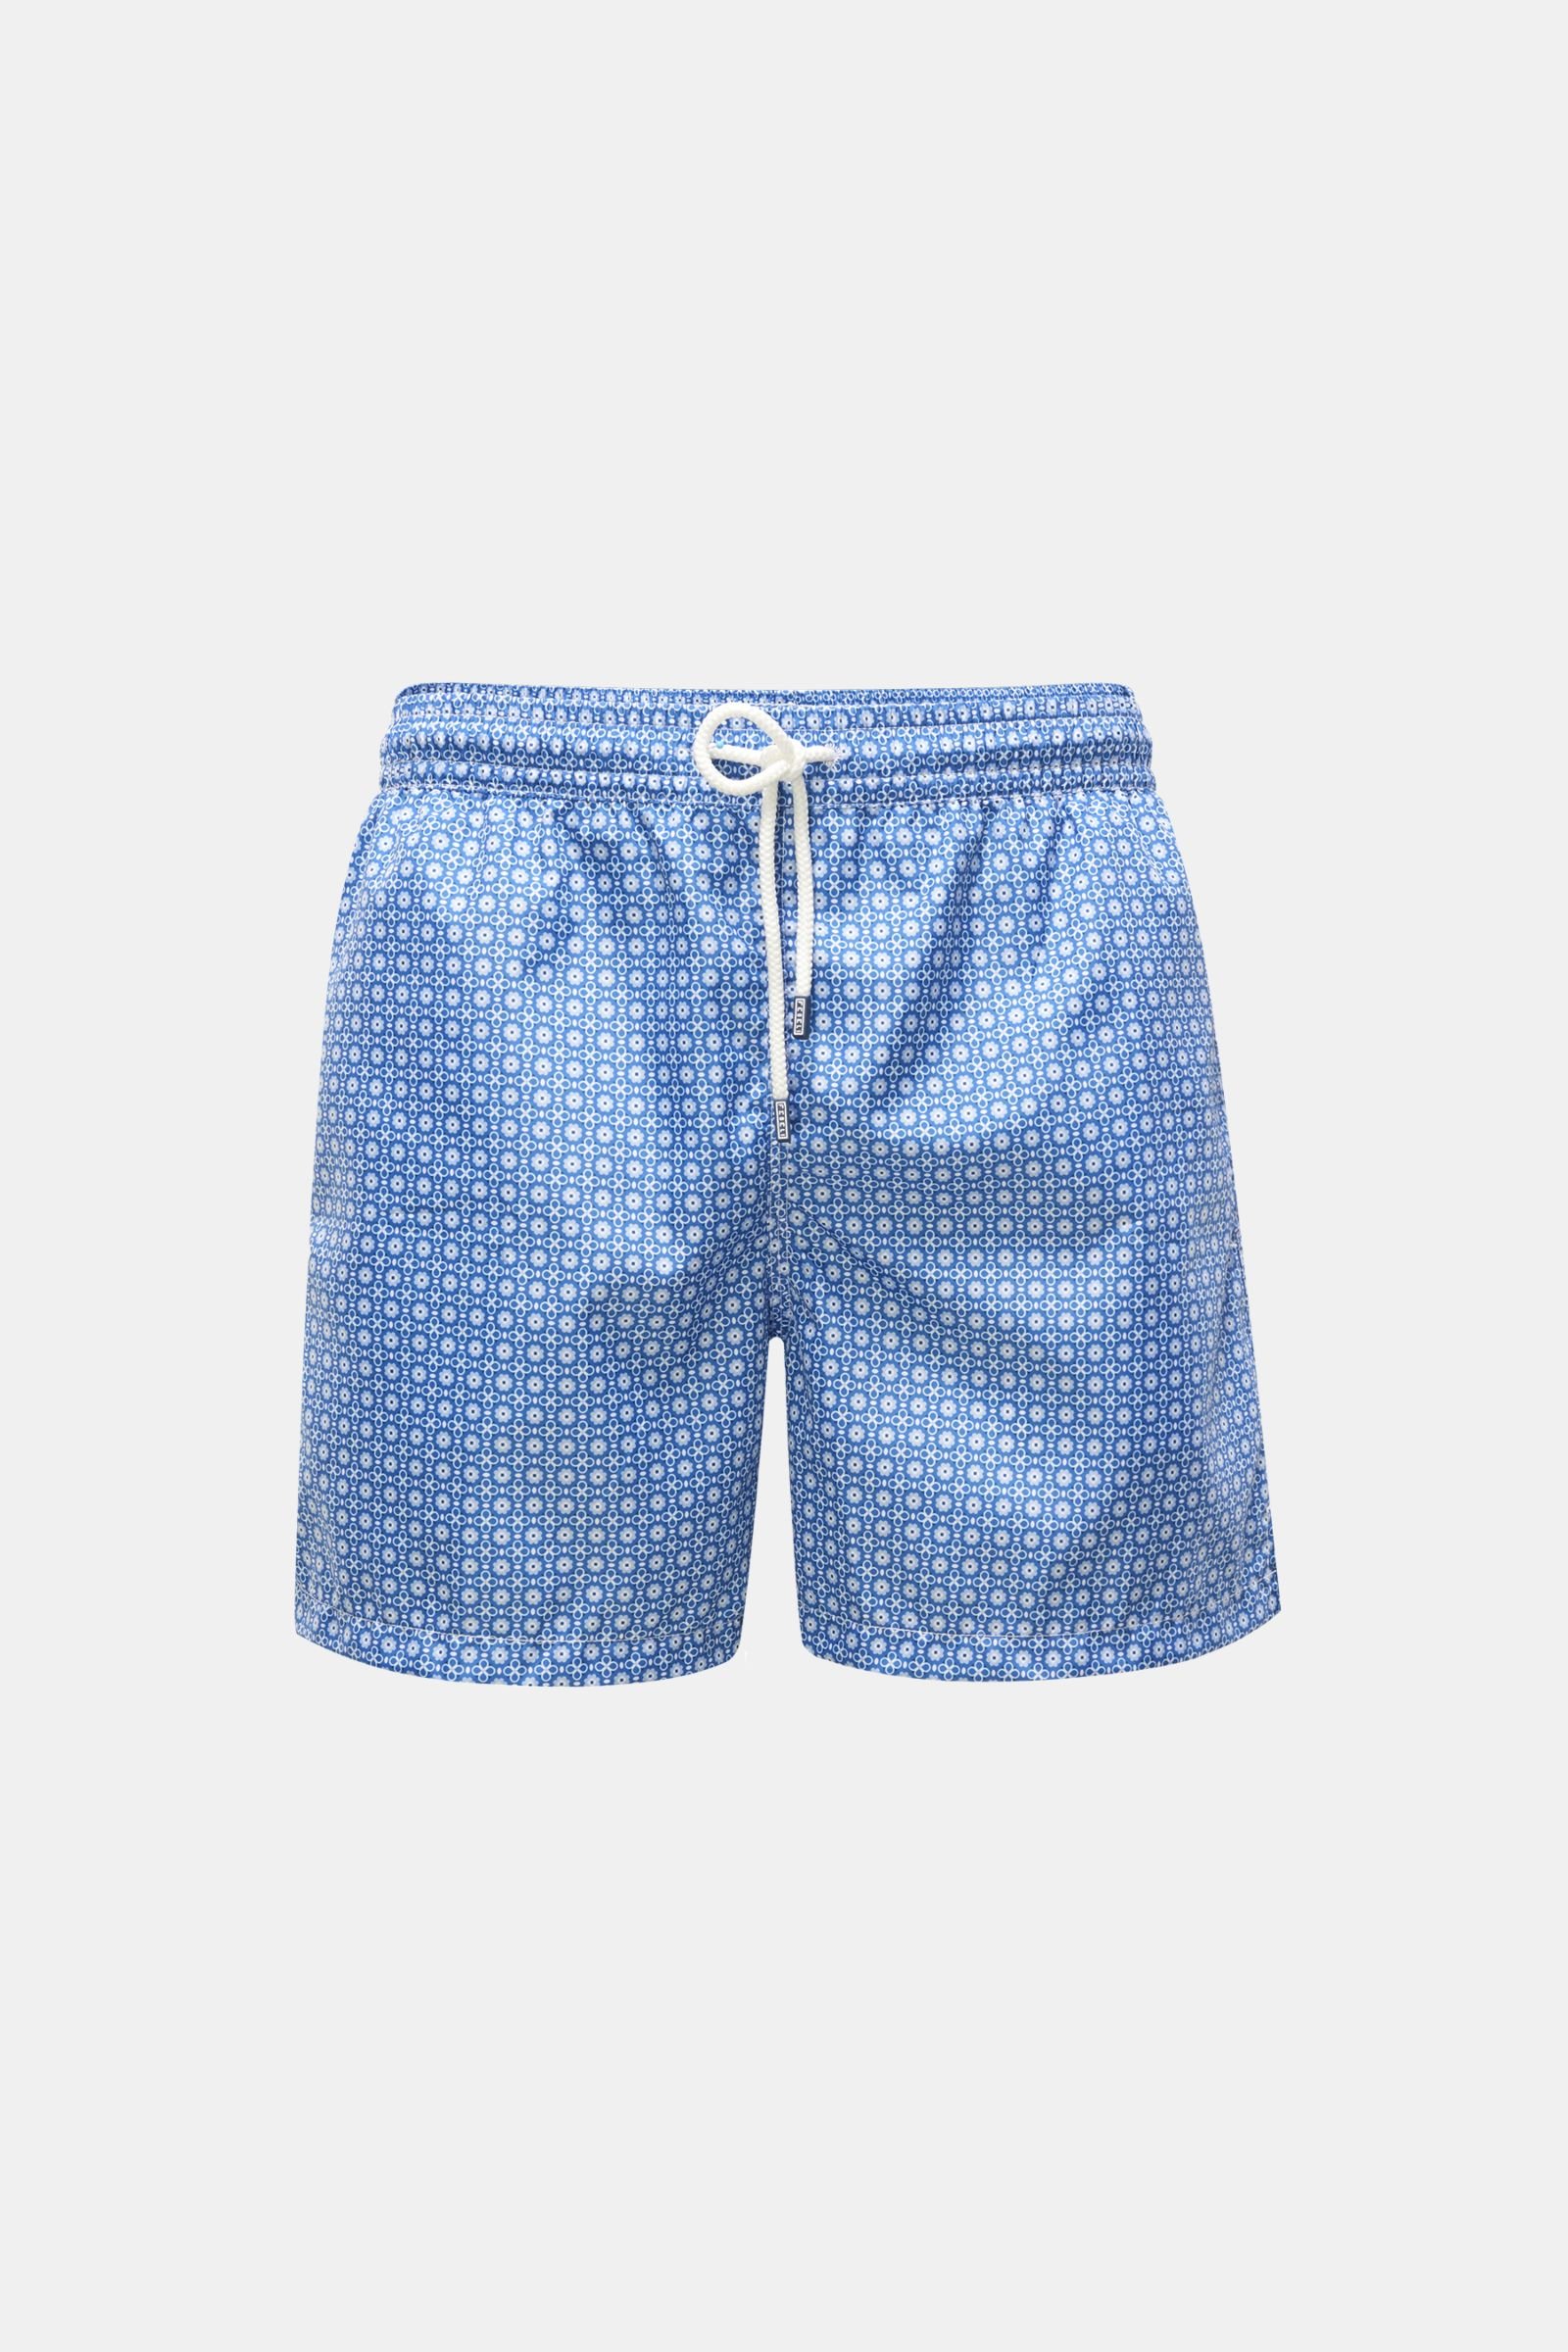 Swim shorts 'Madeira Airstop' dark blue/white patterned